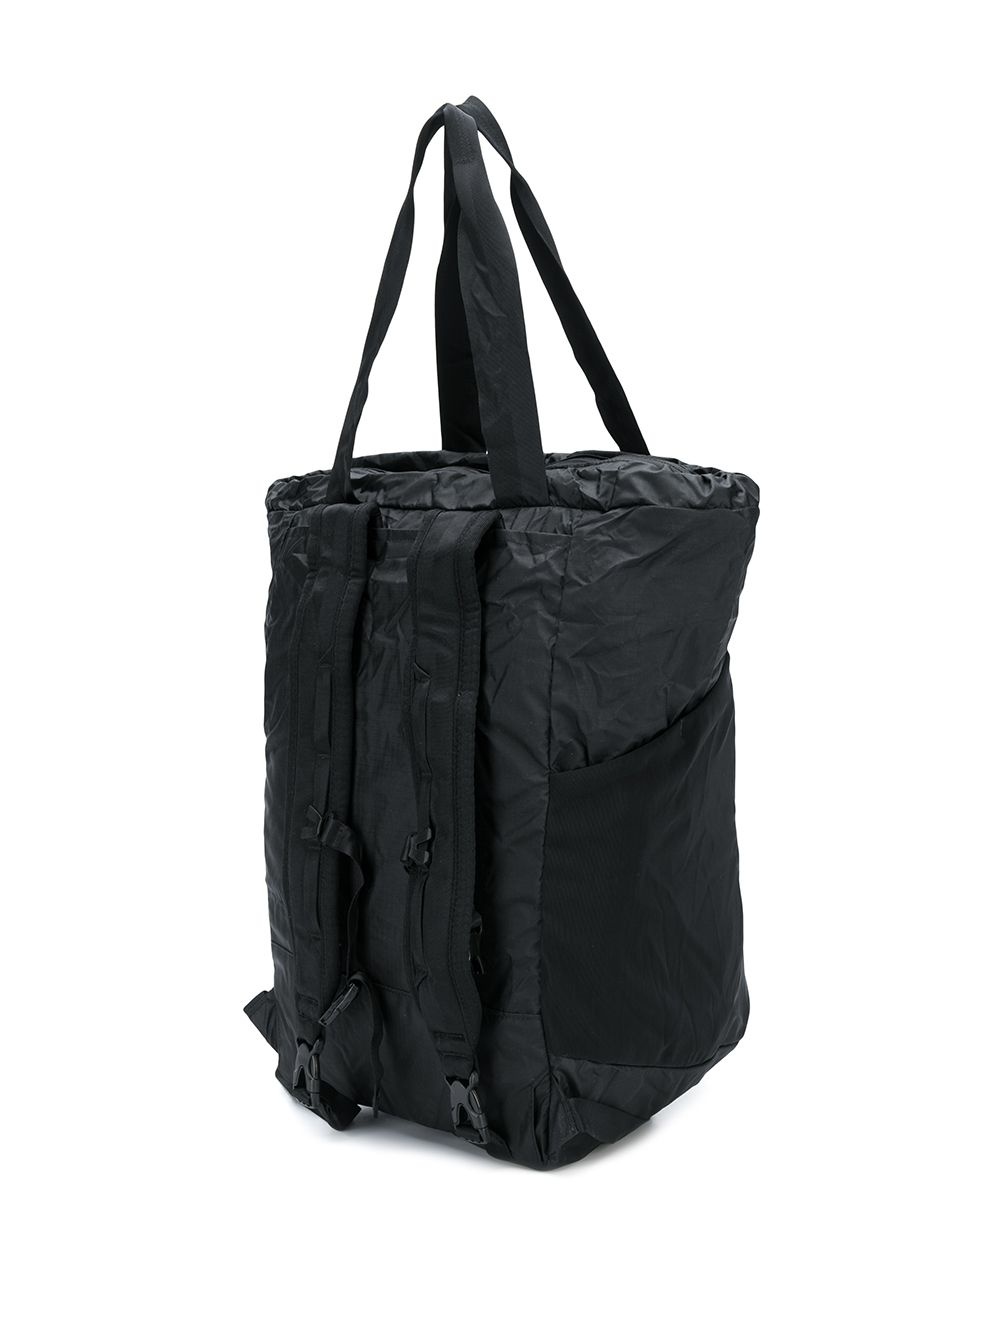 Black Hole backpack - 3